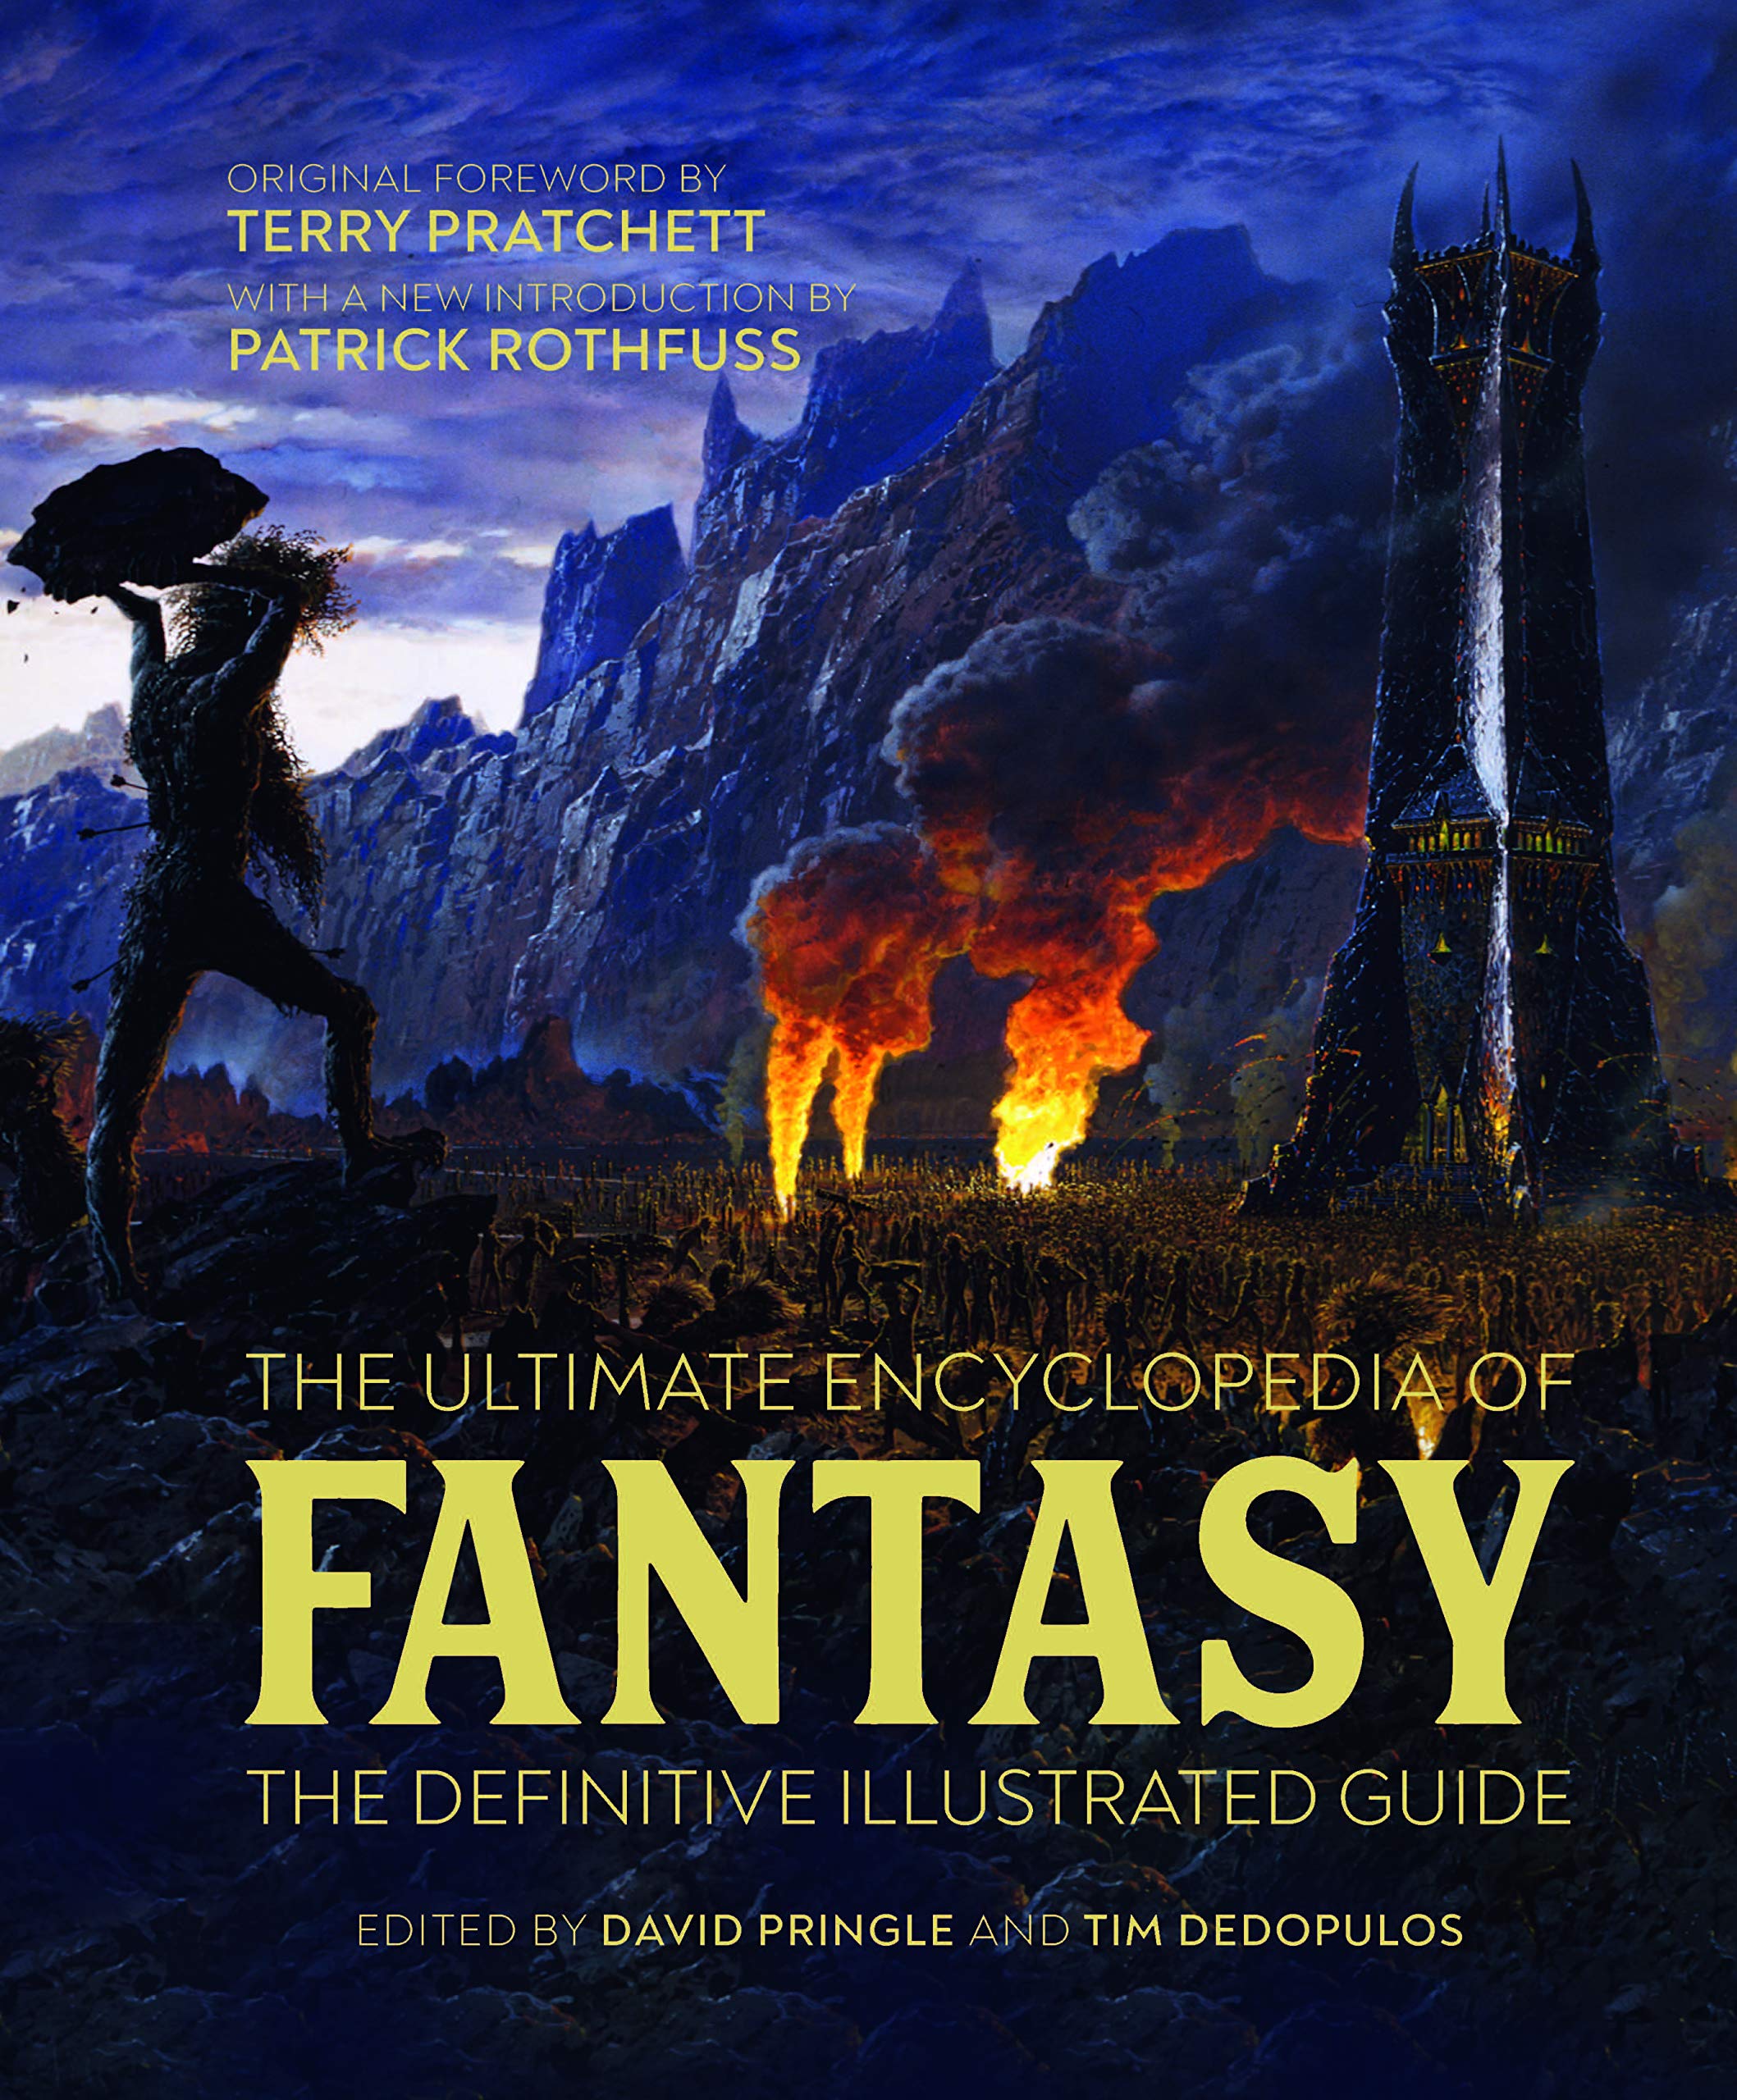 The Ultimate Encyclopedia of Fantasy | David Pringle, Tim Dedopulos